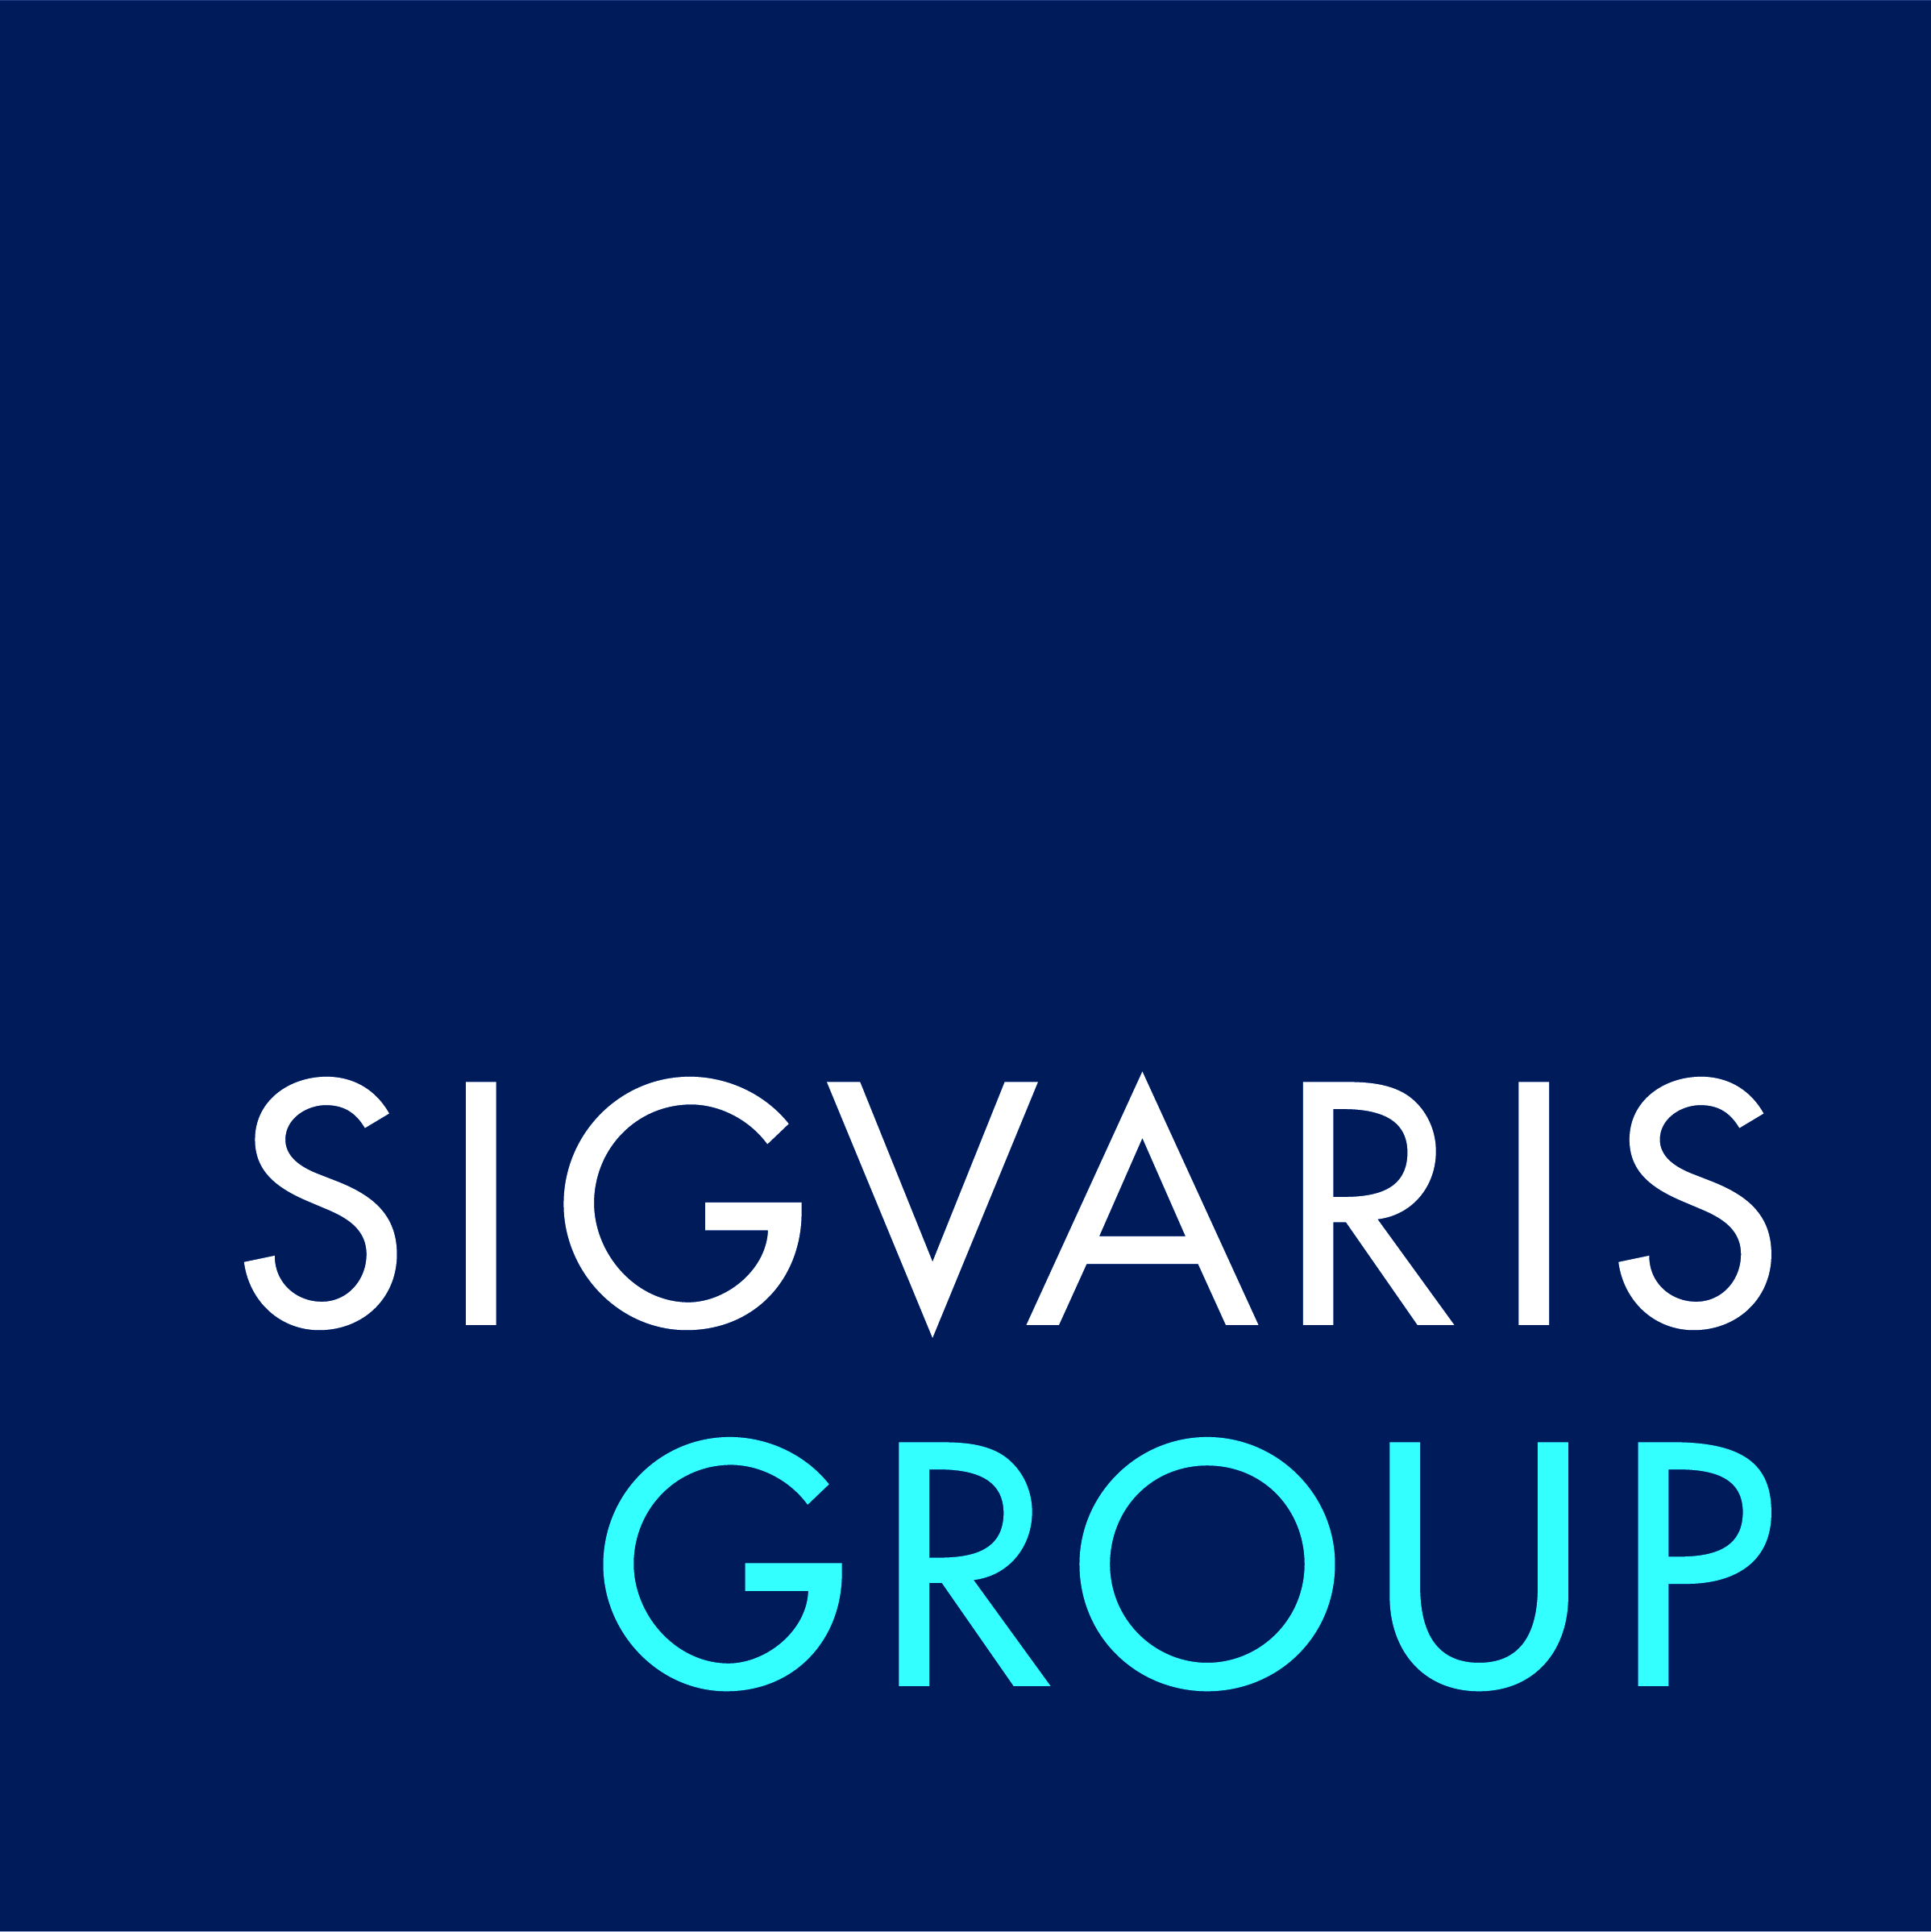 Sigvaris Group (1)